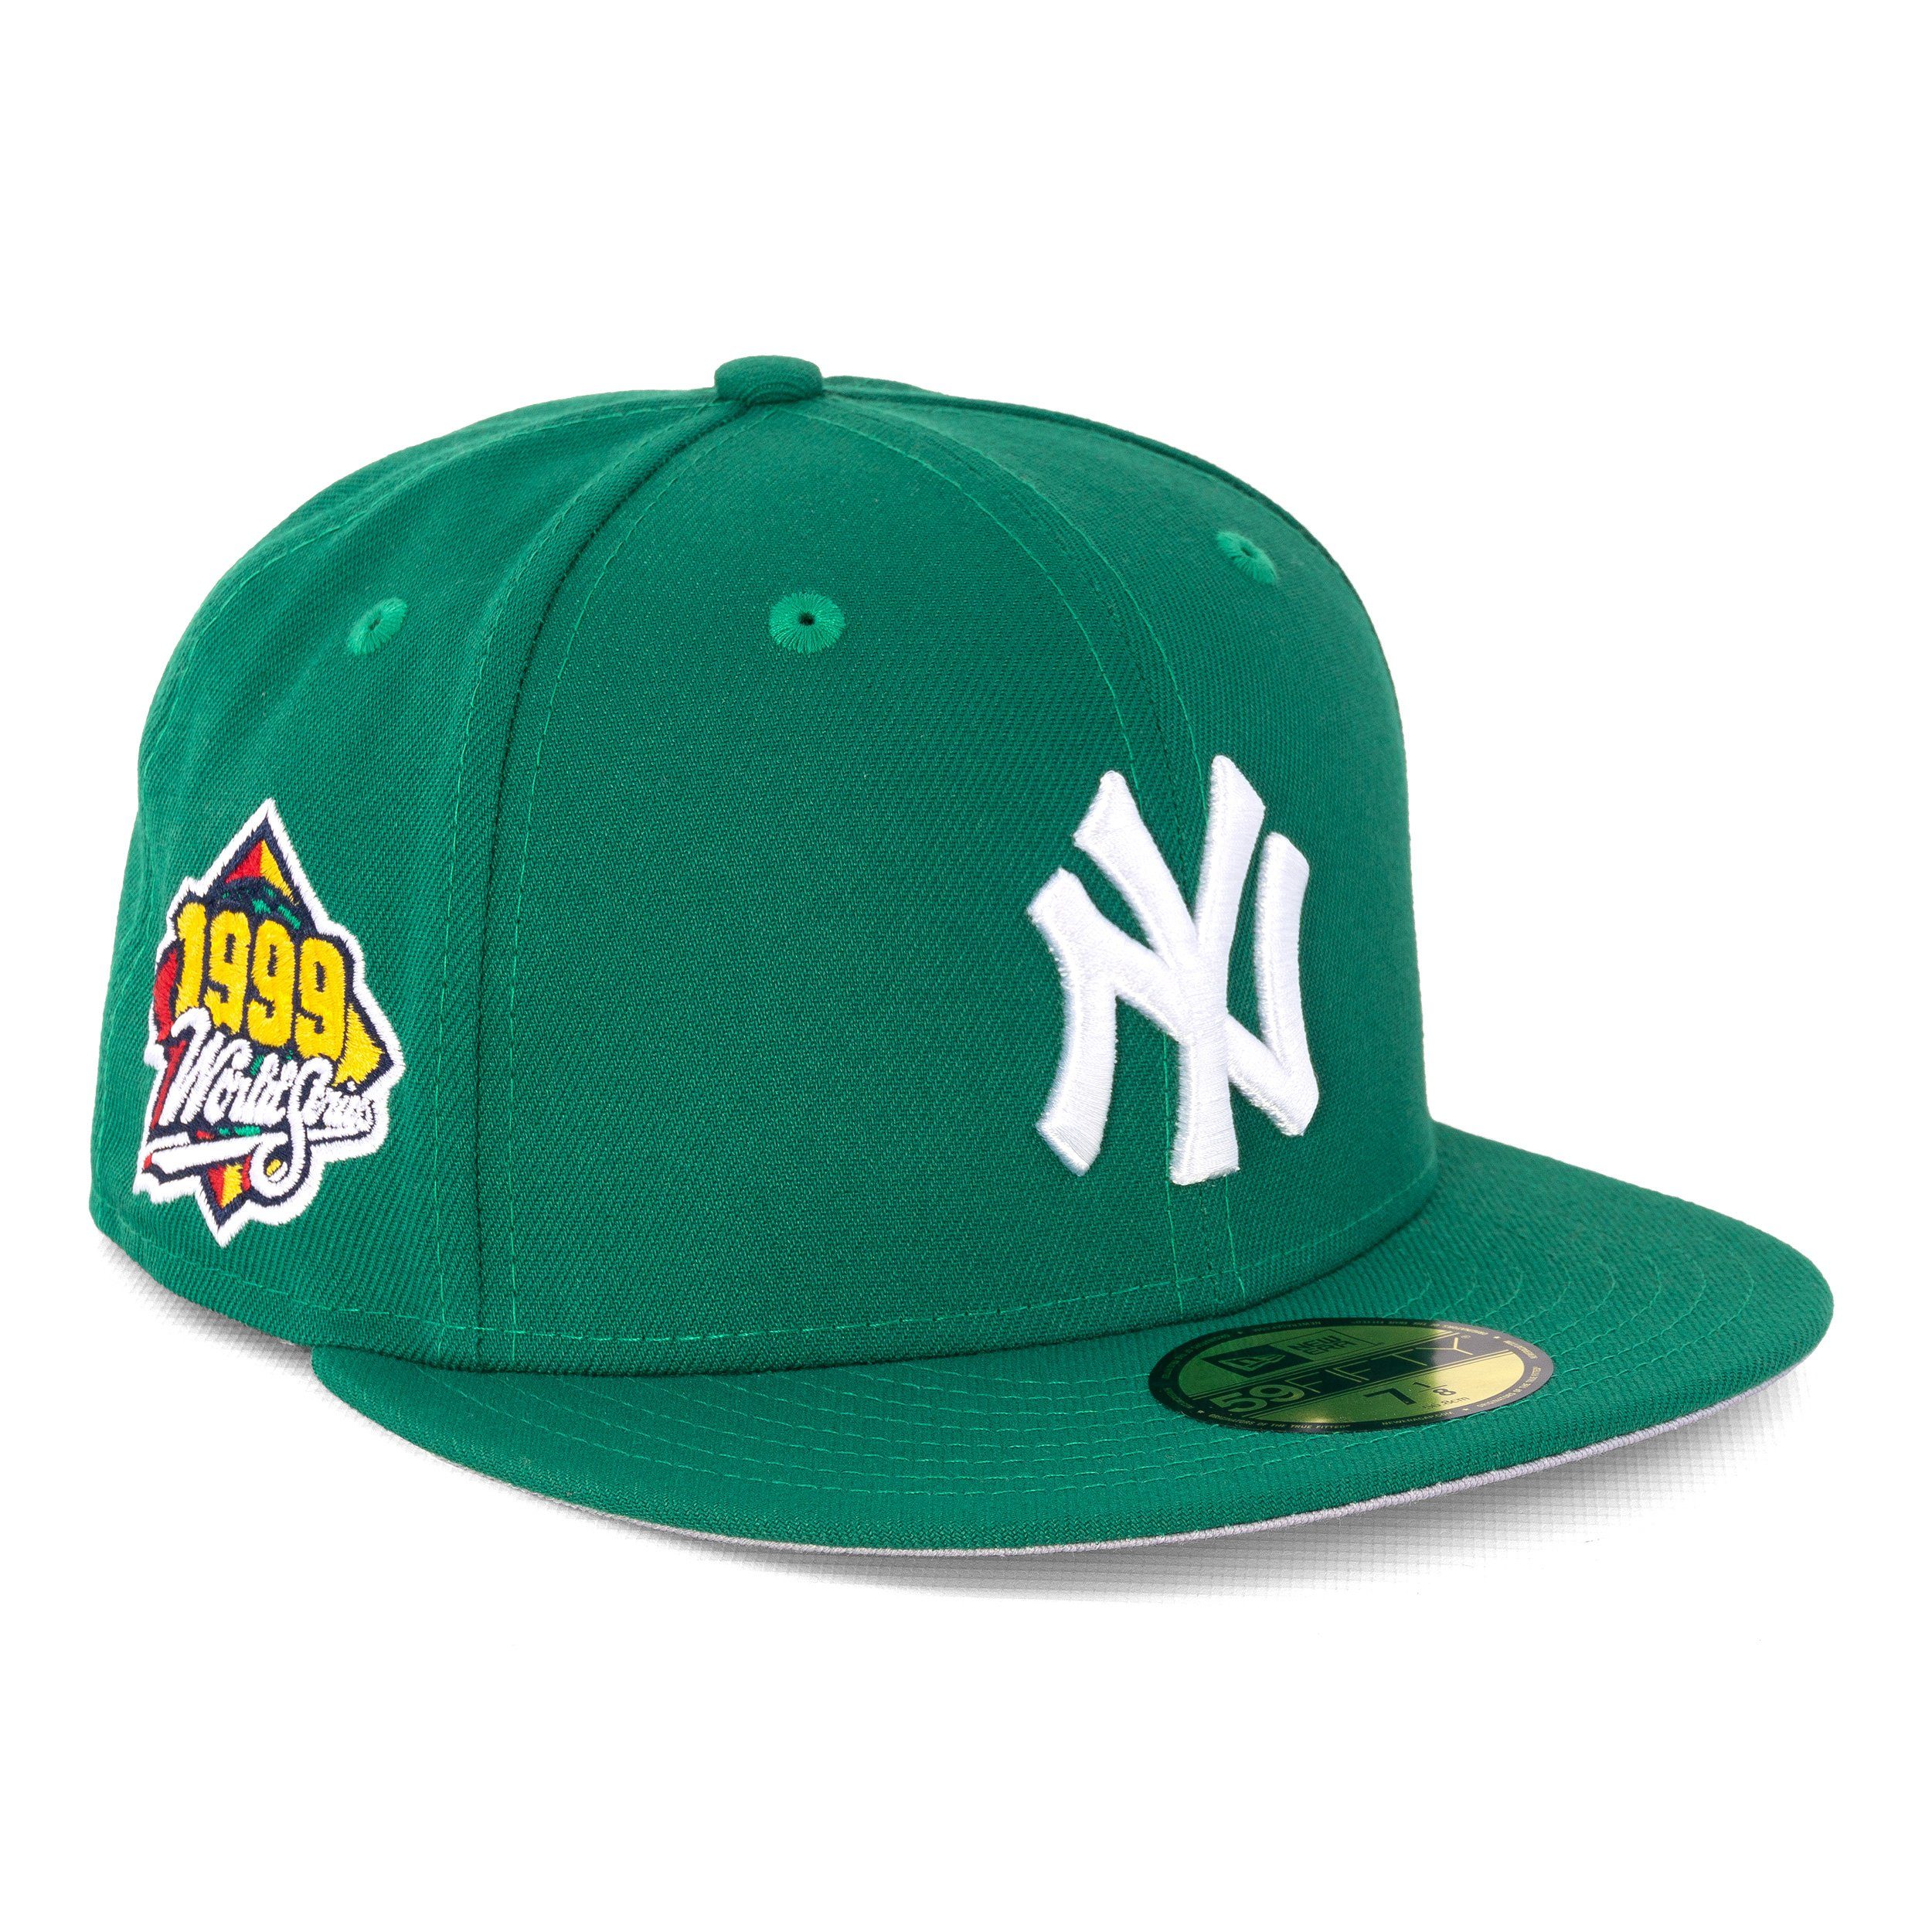 1999 New Baseball Cap WS 59 New Cap Fifty Era Yankees (1-St) York New Era